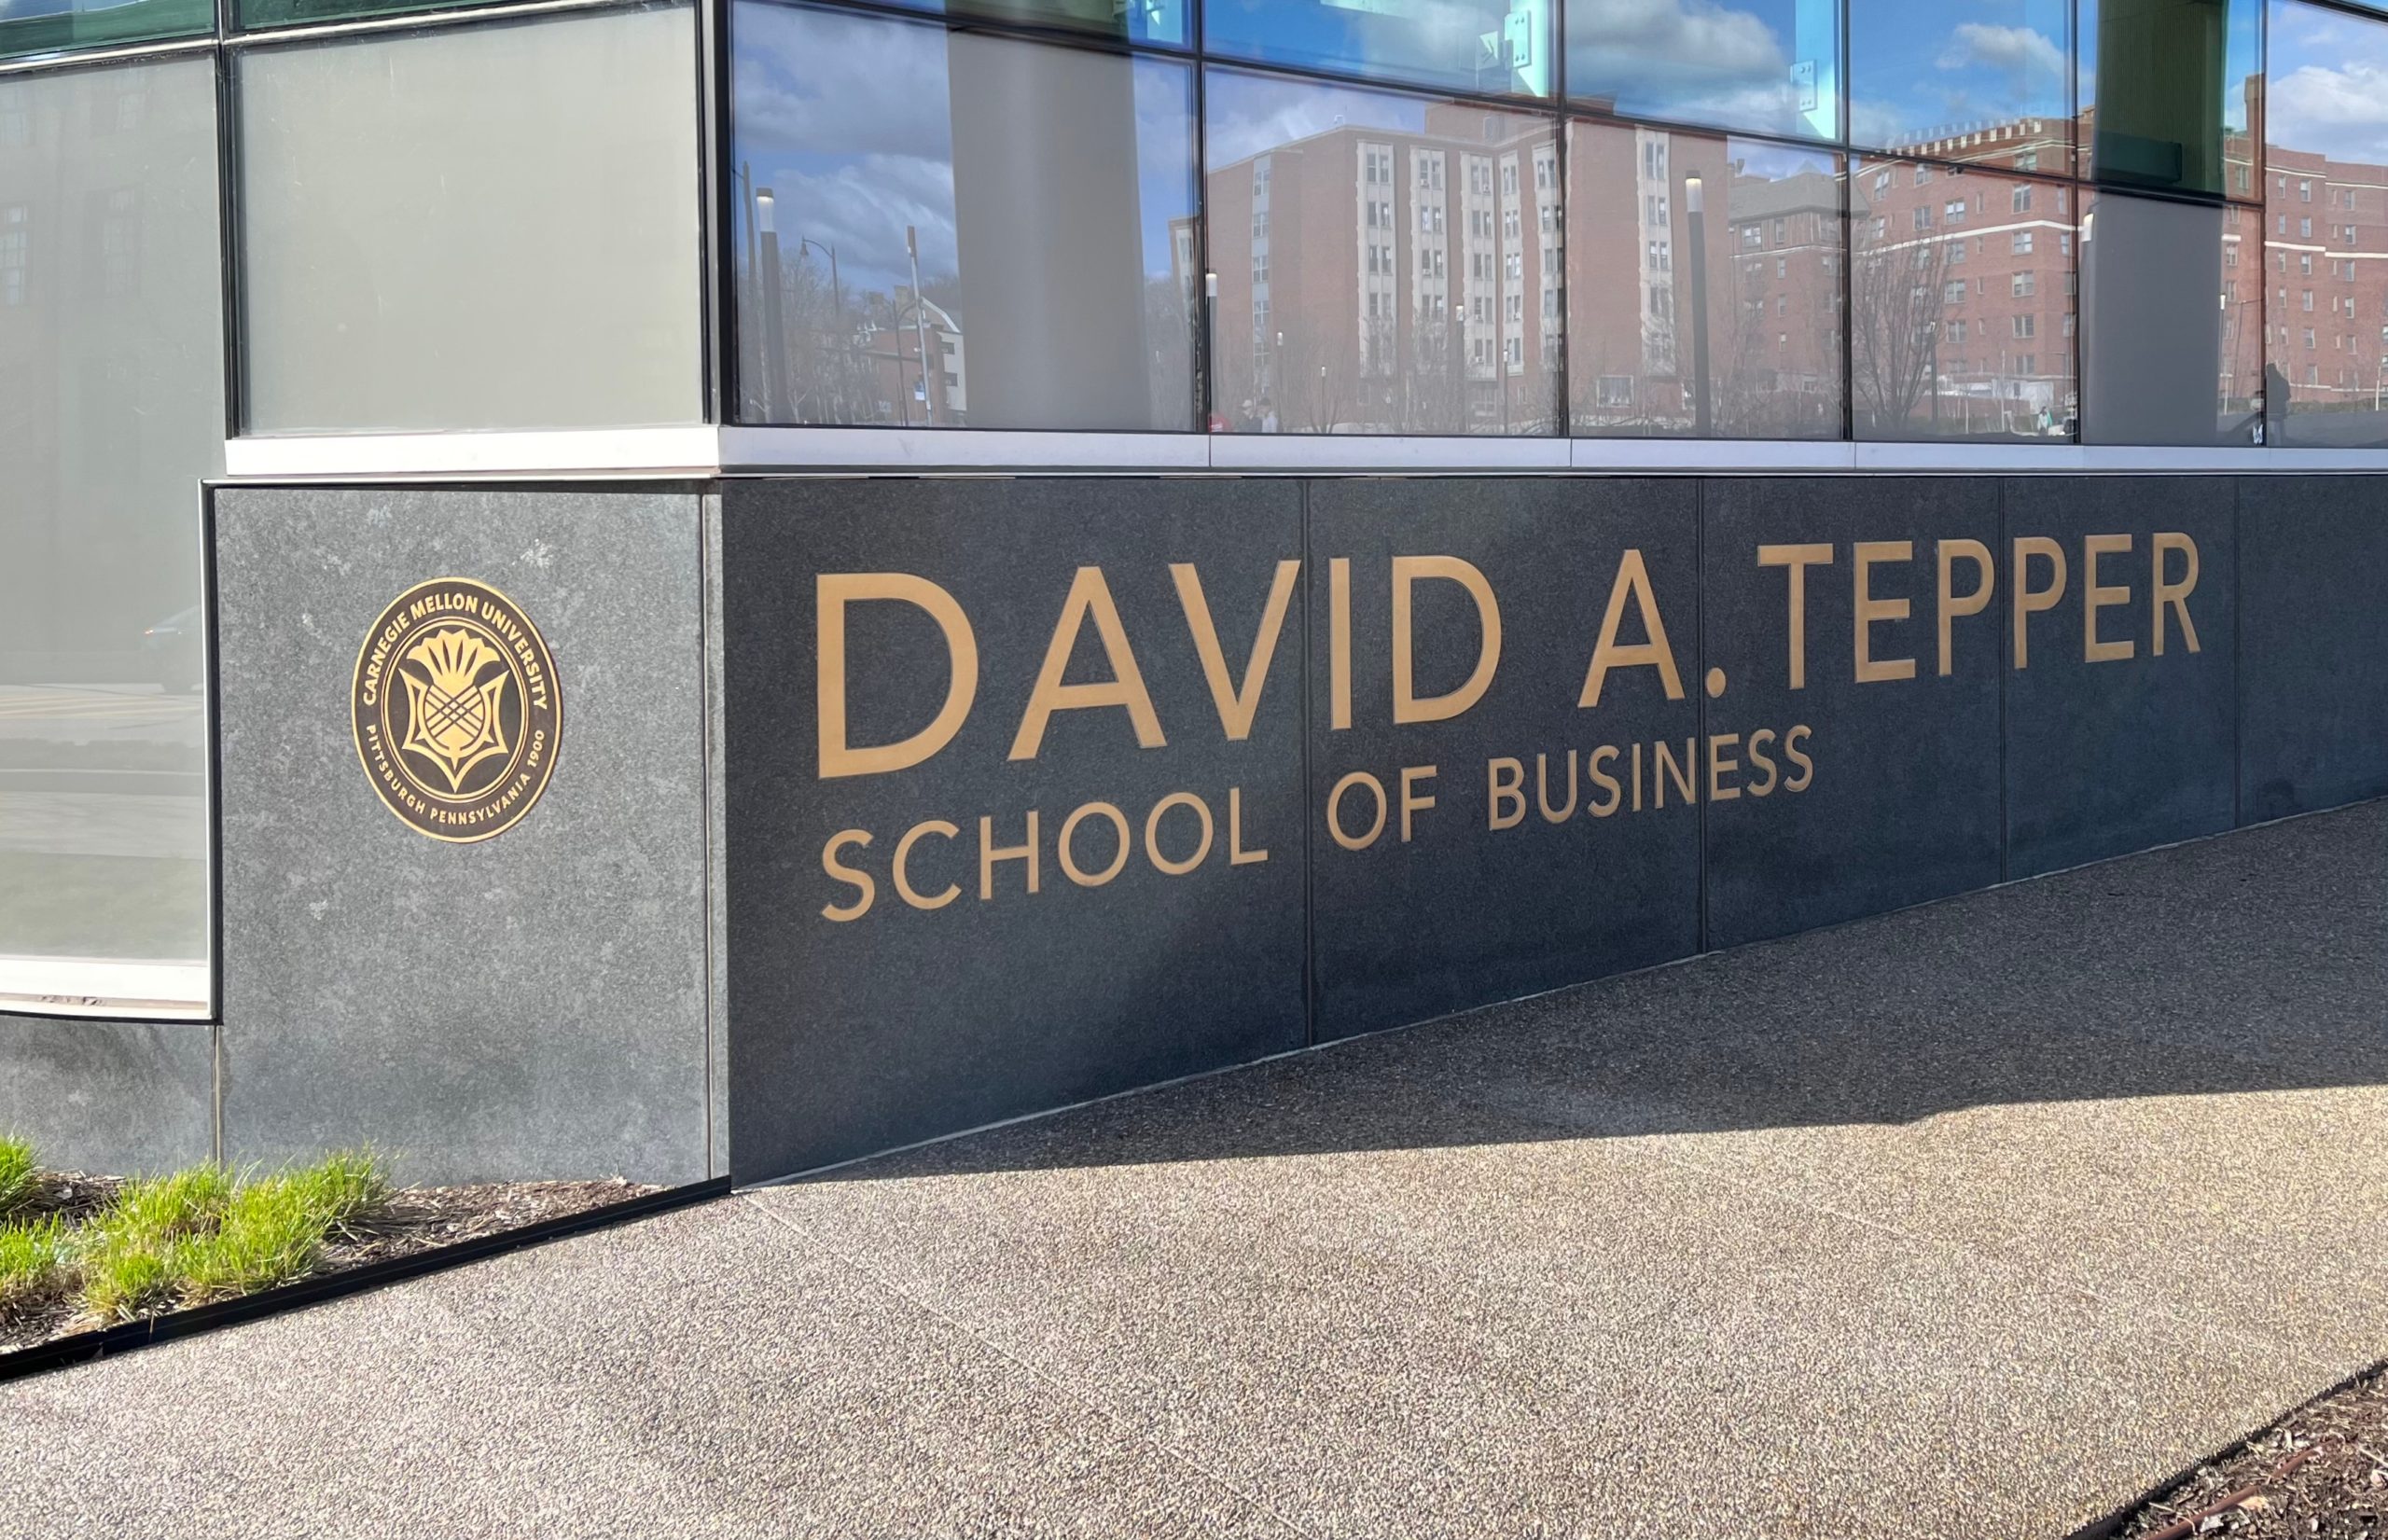 David Tepper School of business sign